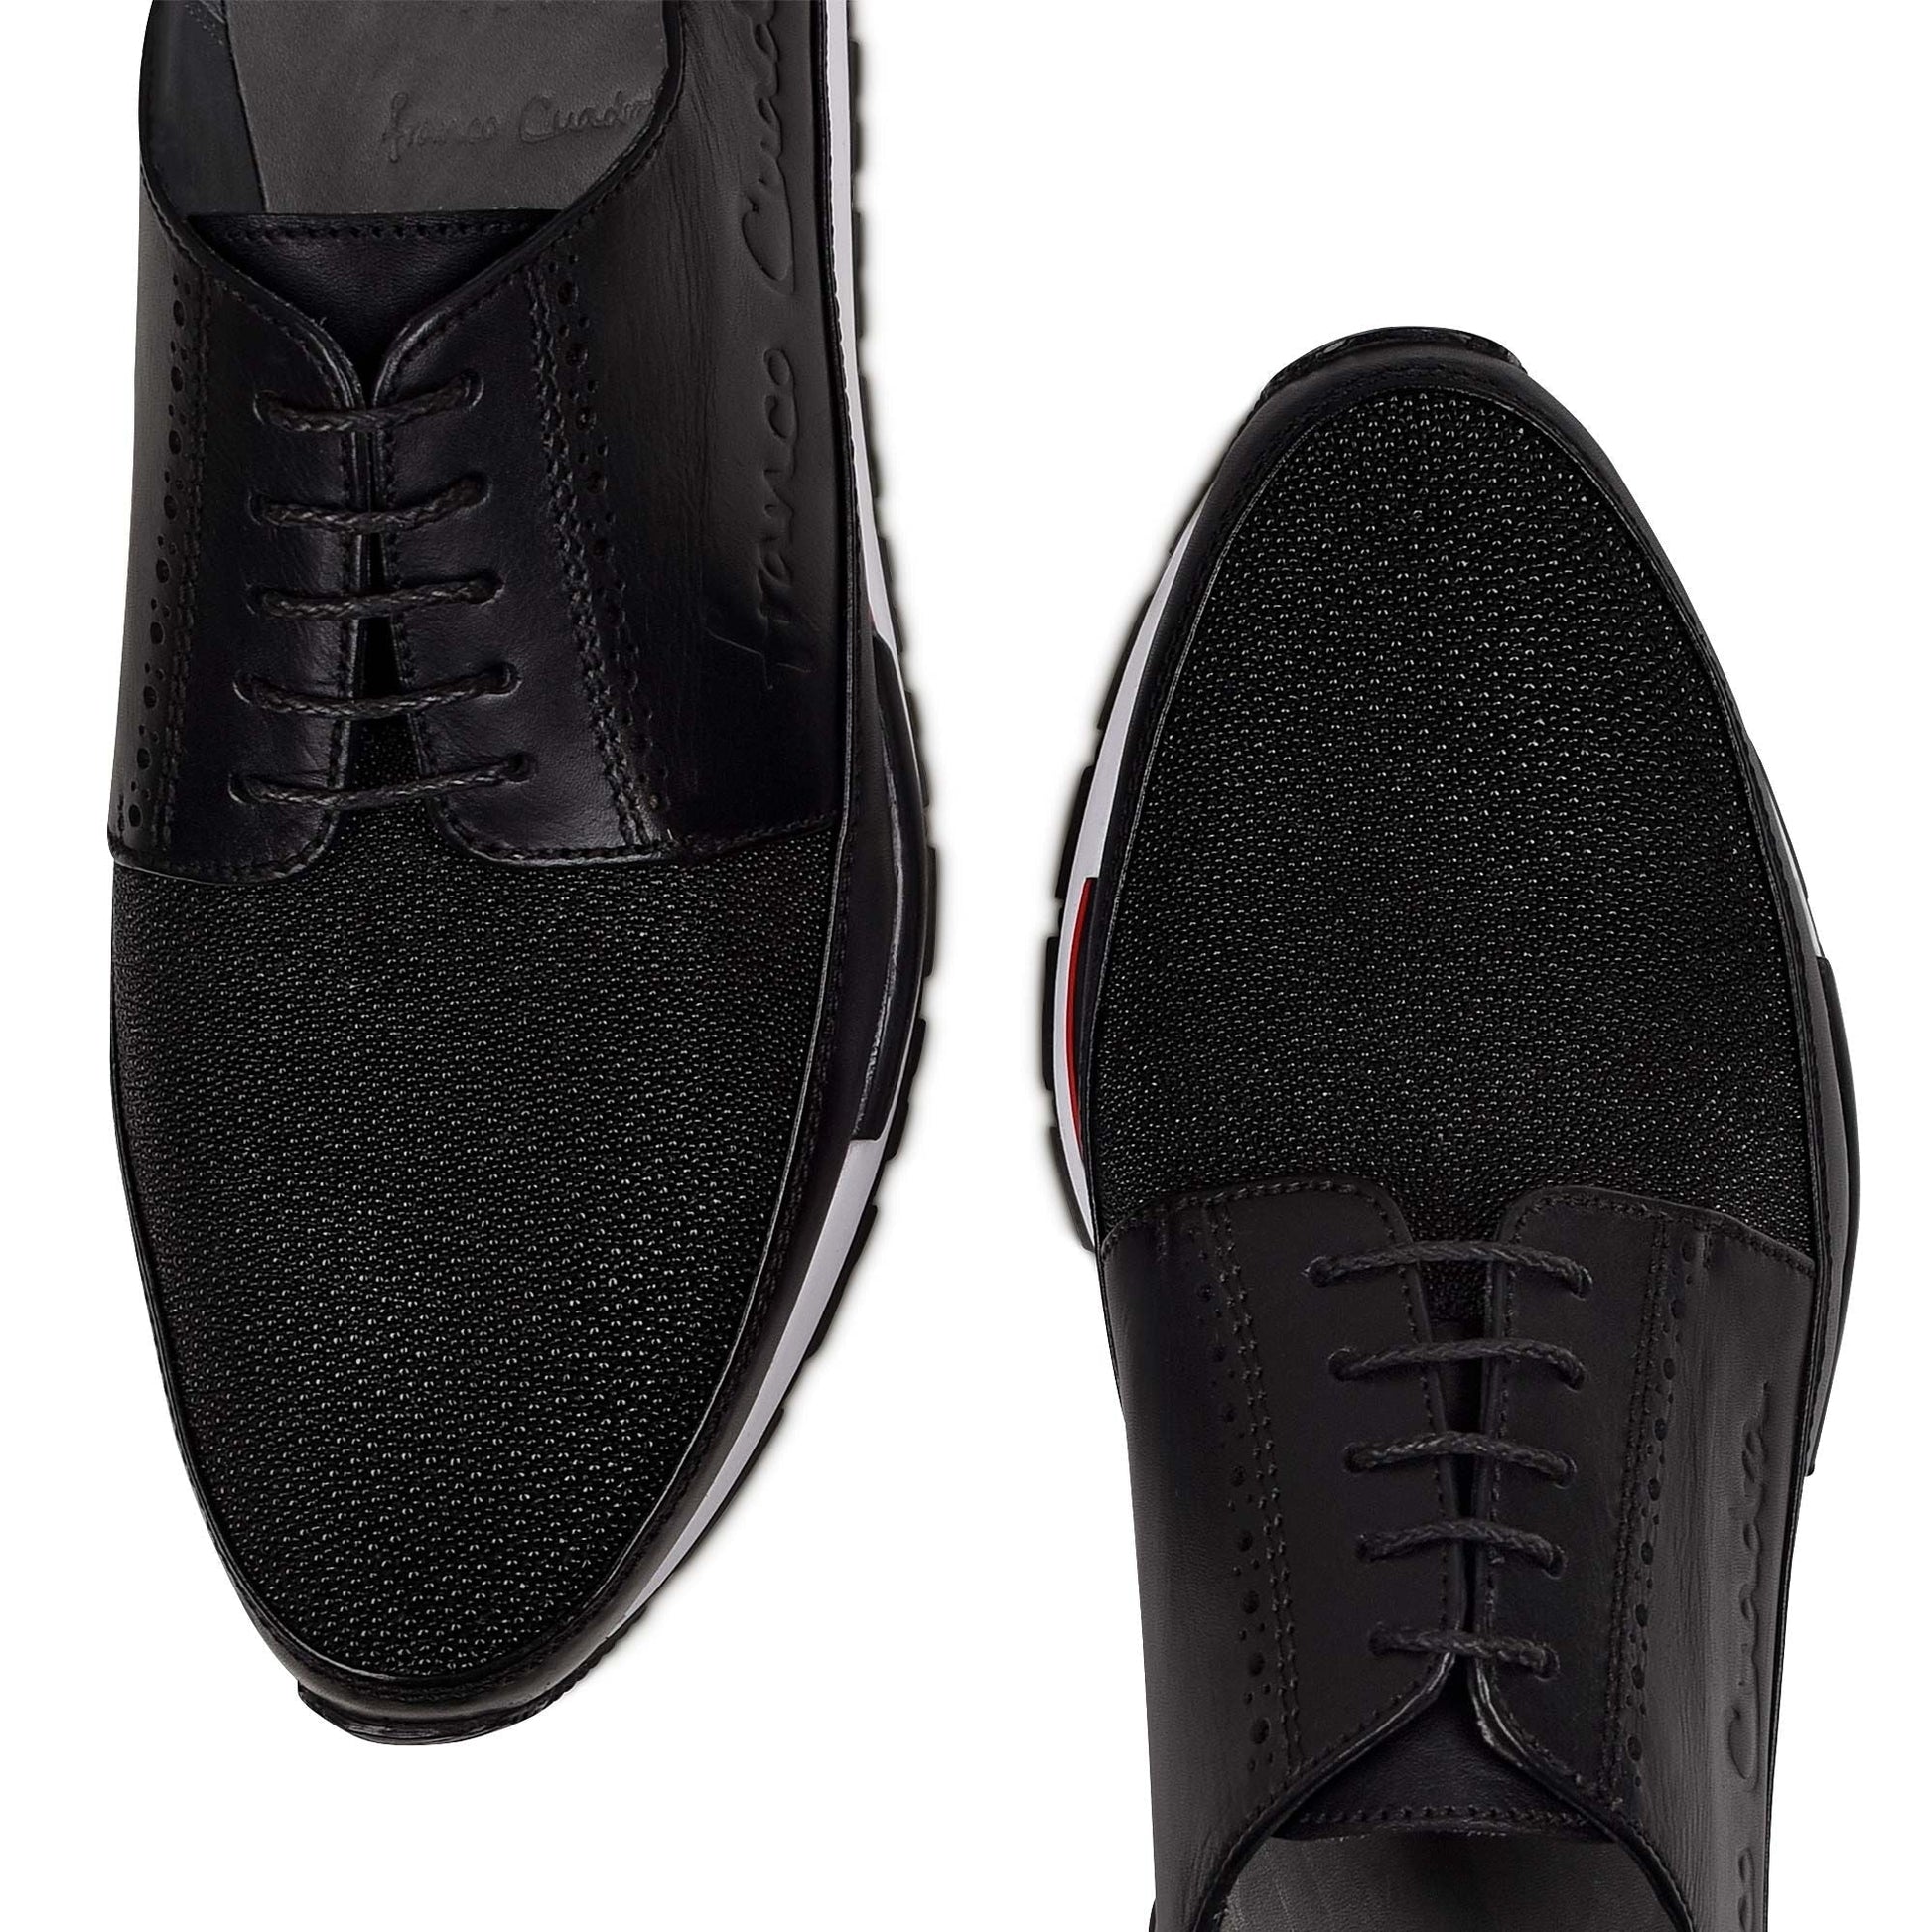 127MTTS - Cuadra black casual fashion stingray derby sneakers for men-FRANCO CUADRA-Kuet-Cuadra-Boots